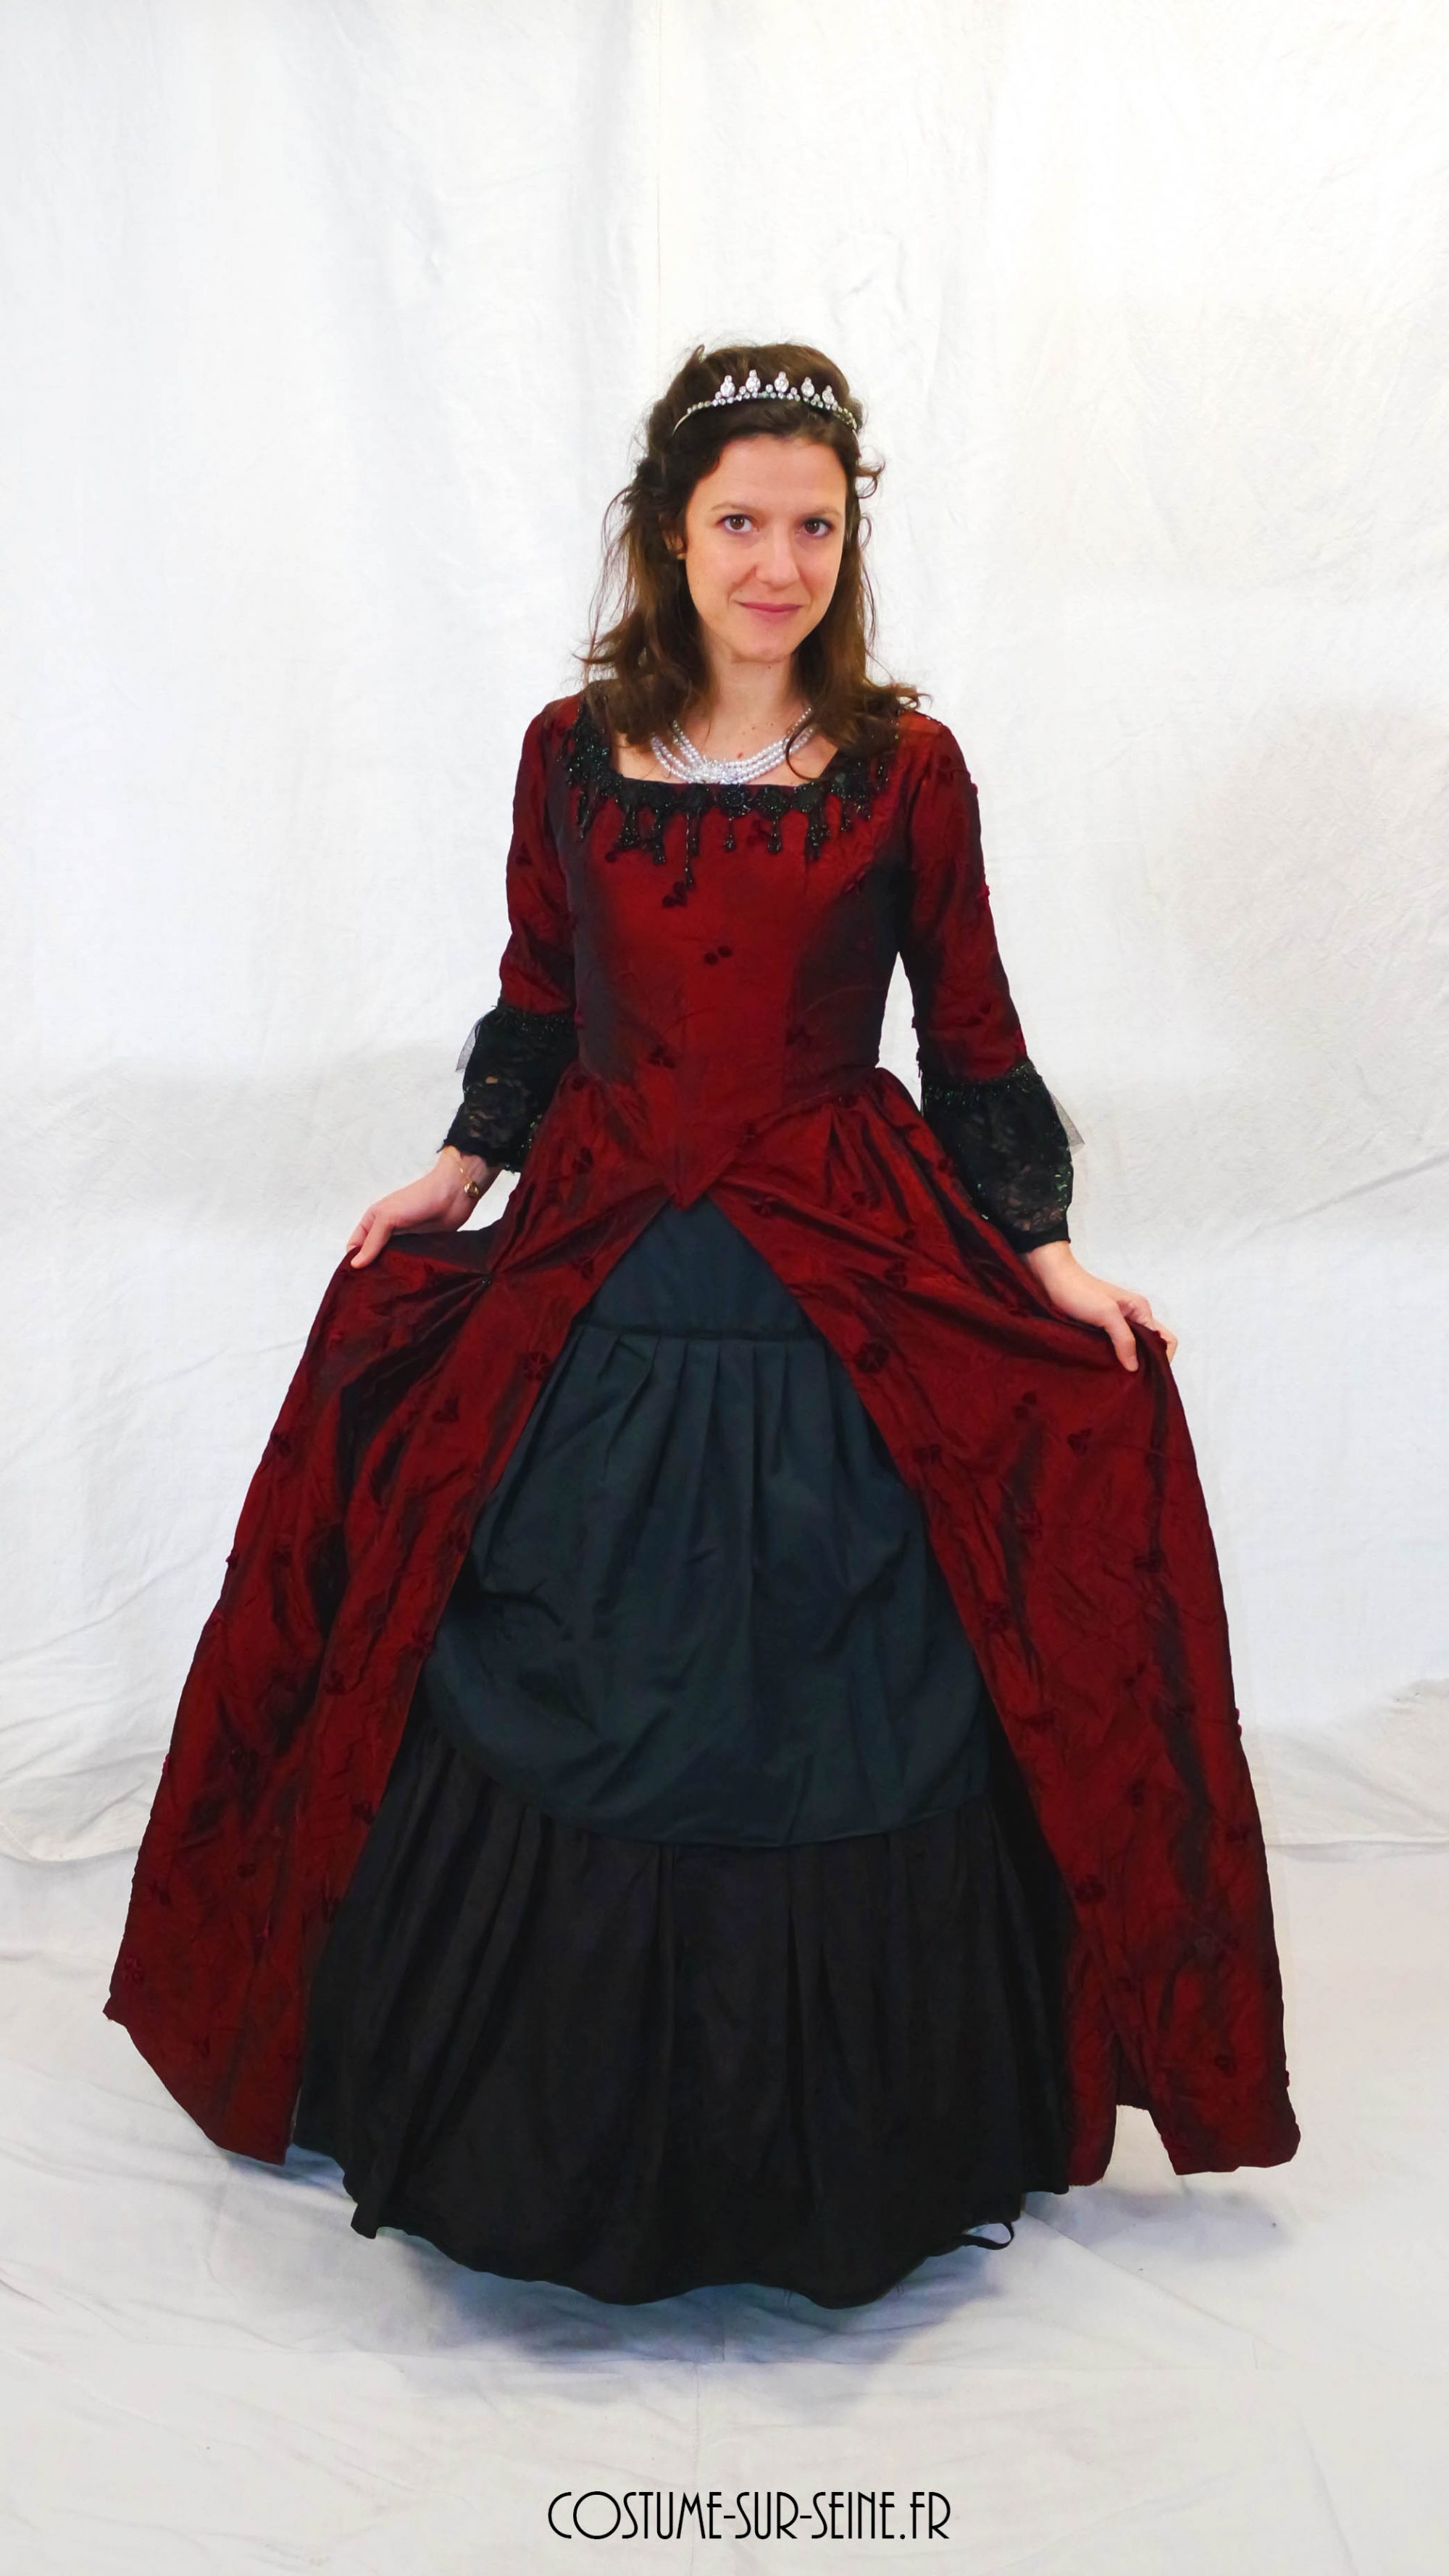 robe XVIIIe rouge et noir révérence